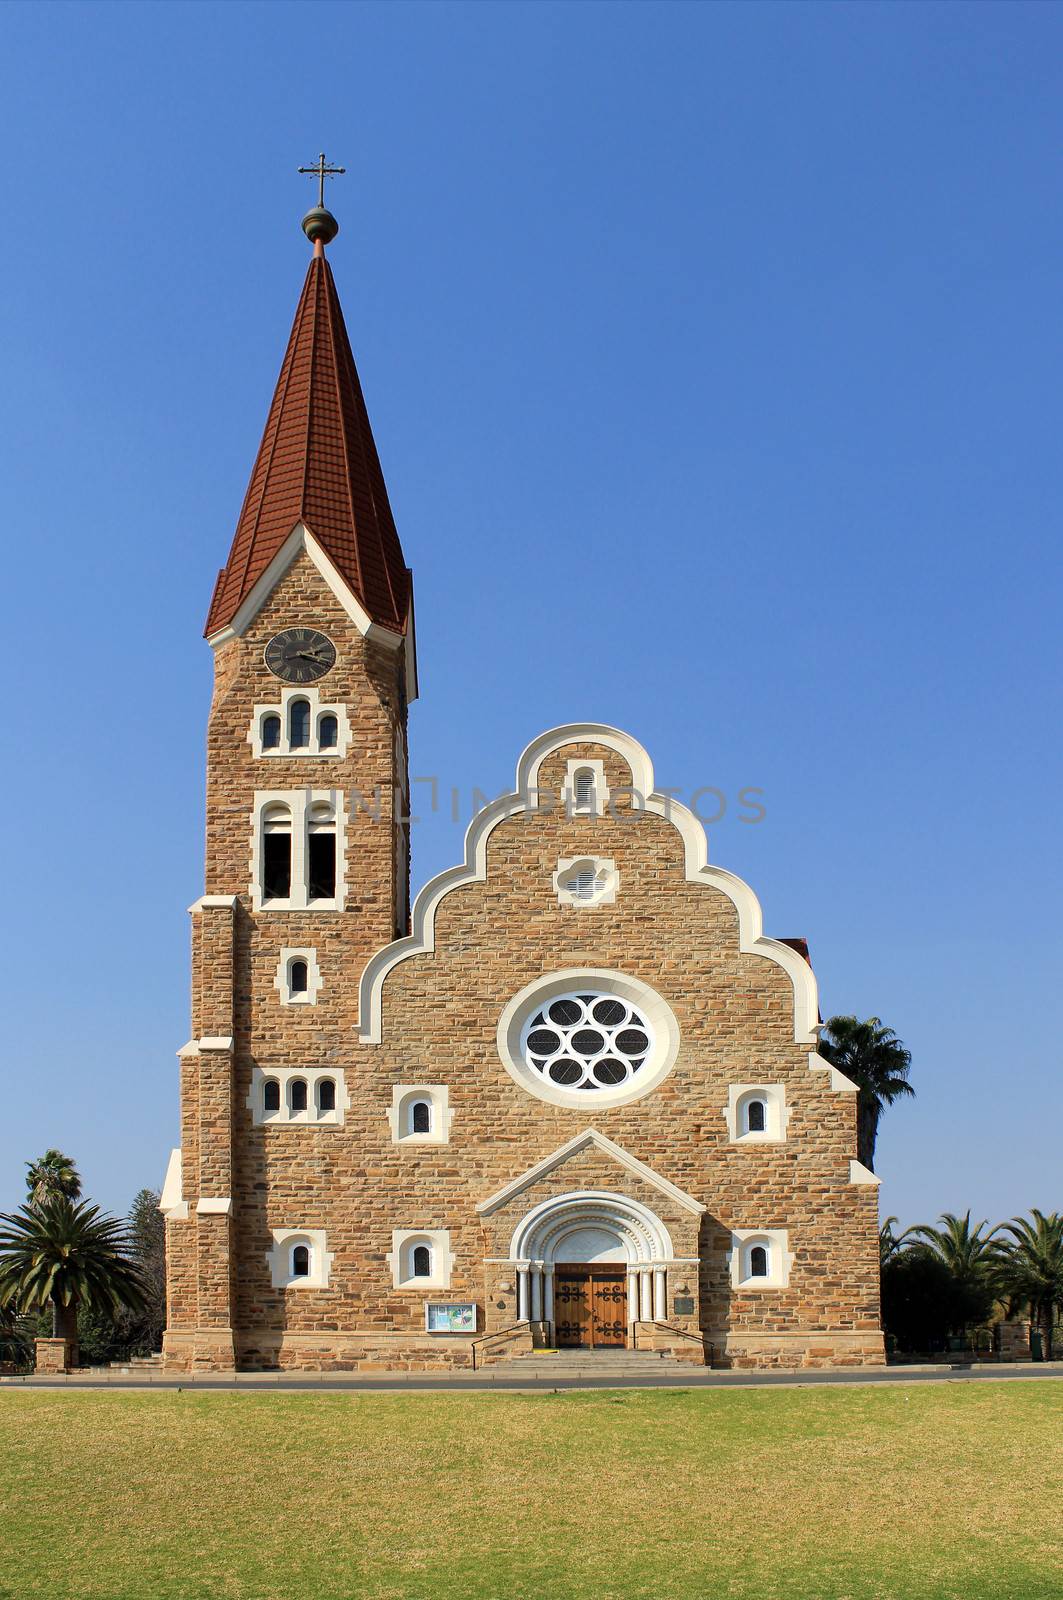 Christuskirche, famous Lutheran church landmark in Windhoek by ptxgarfield